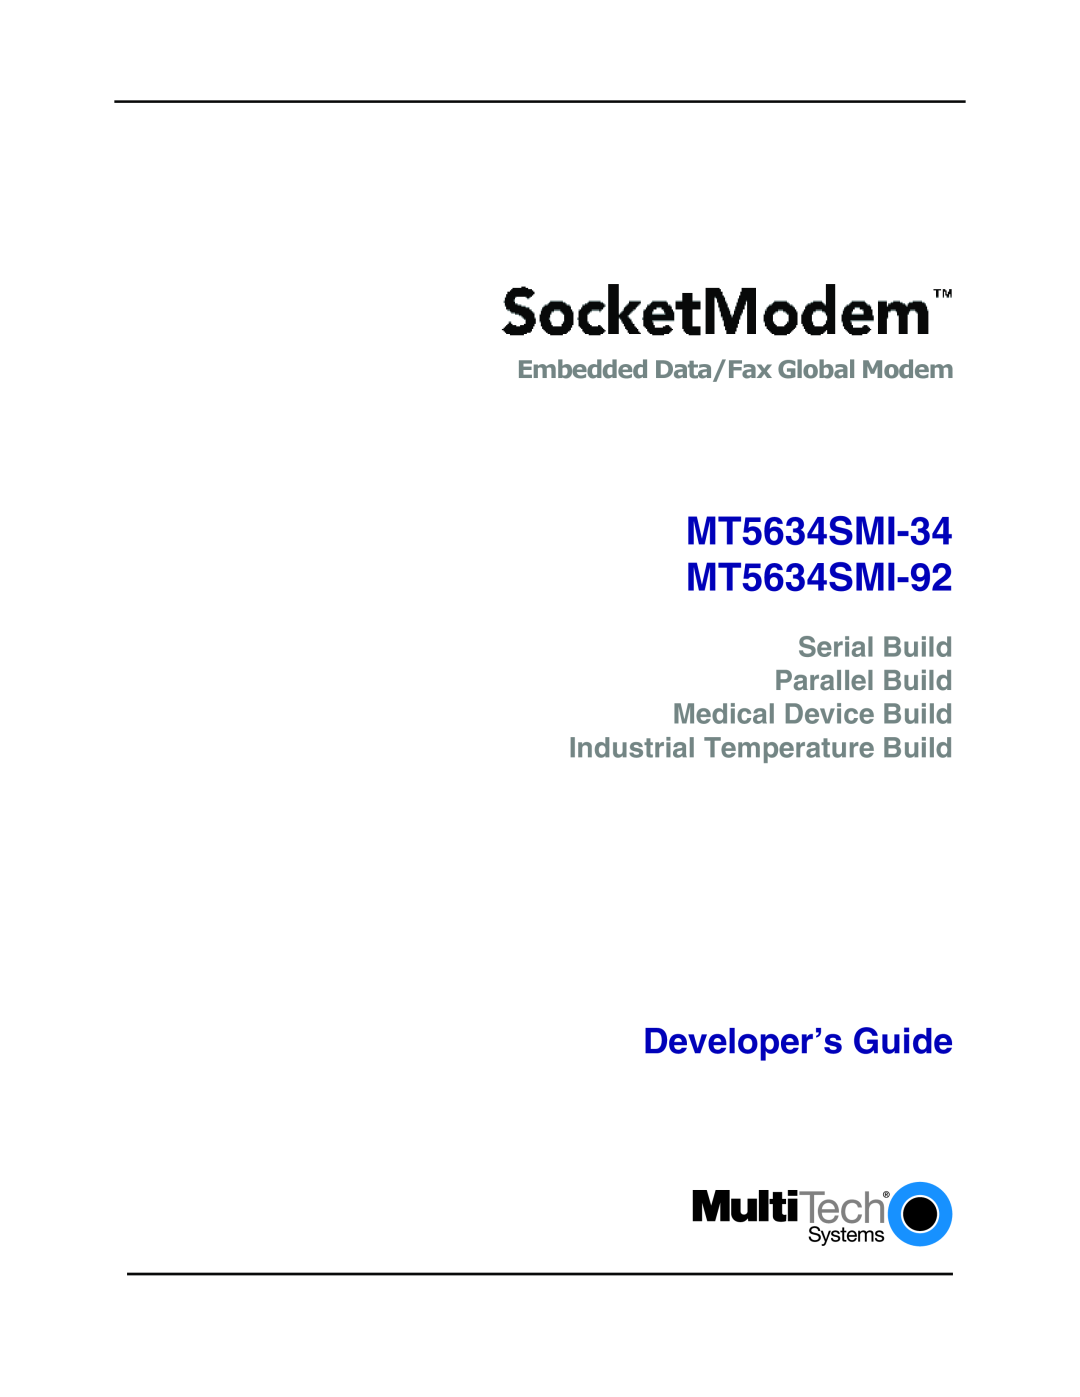 Technics manual MT5634SMI-34 MT5634SMI-92, Developer’s Guide, Serial Build Parallel Build Medical Device Build 